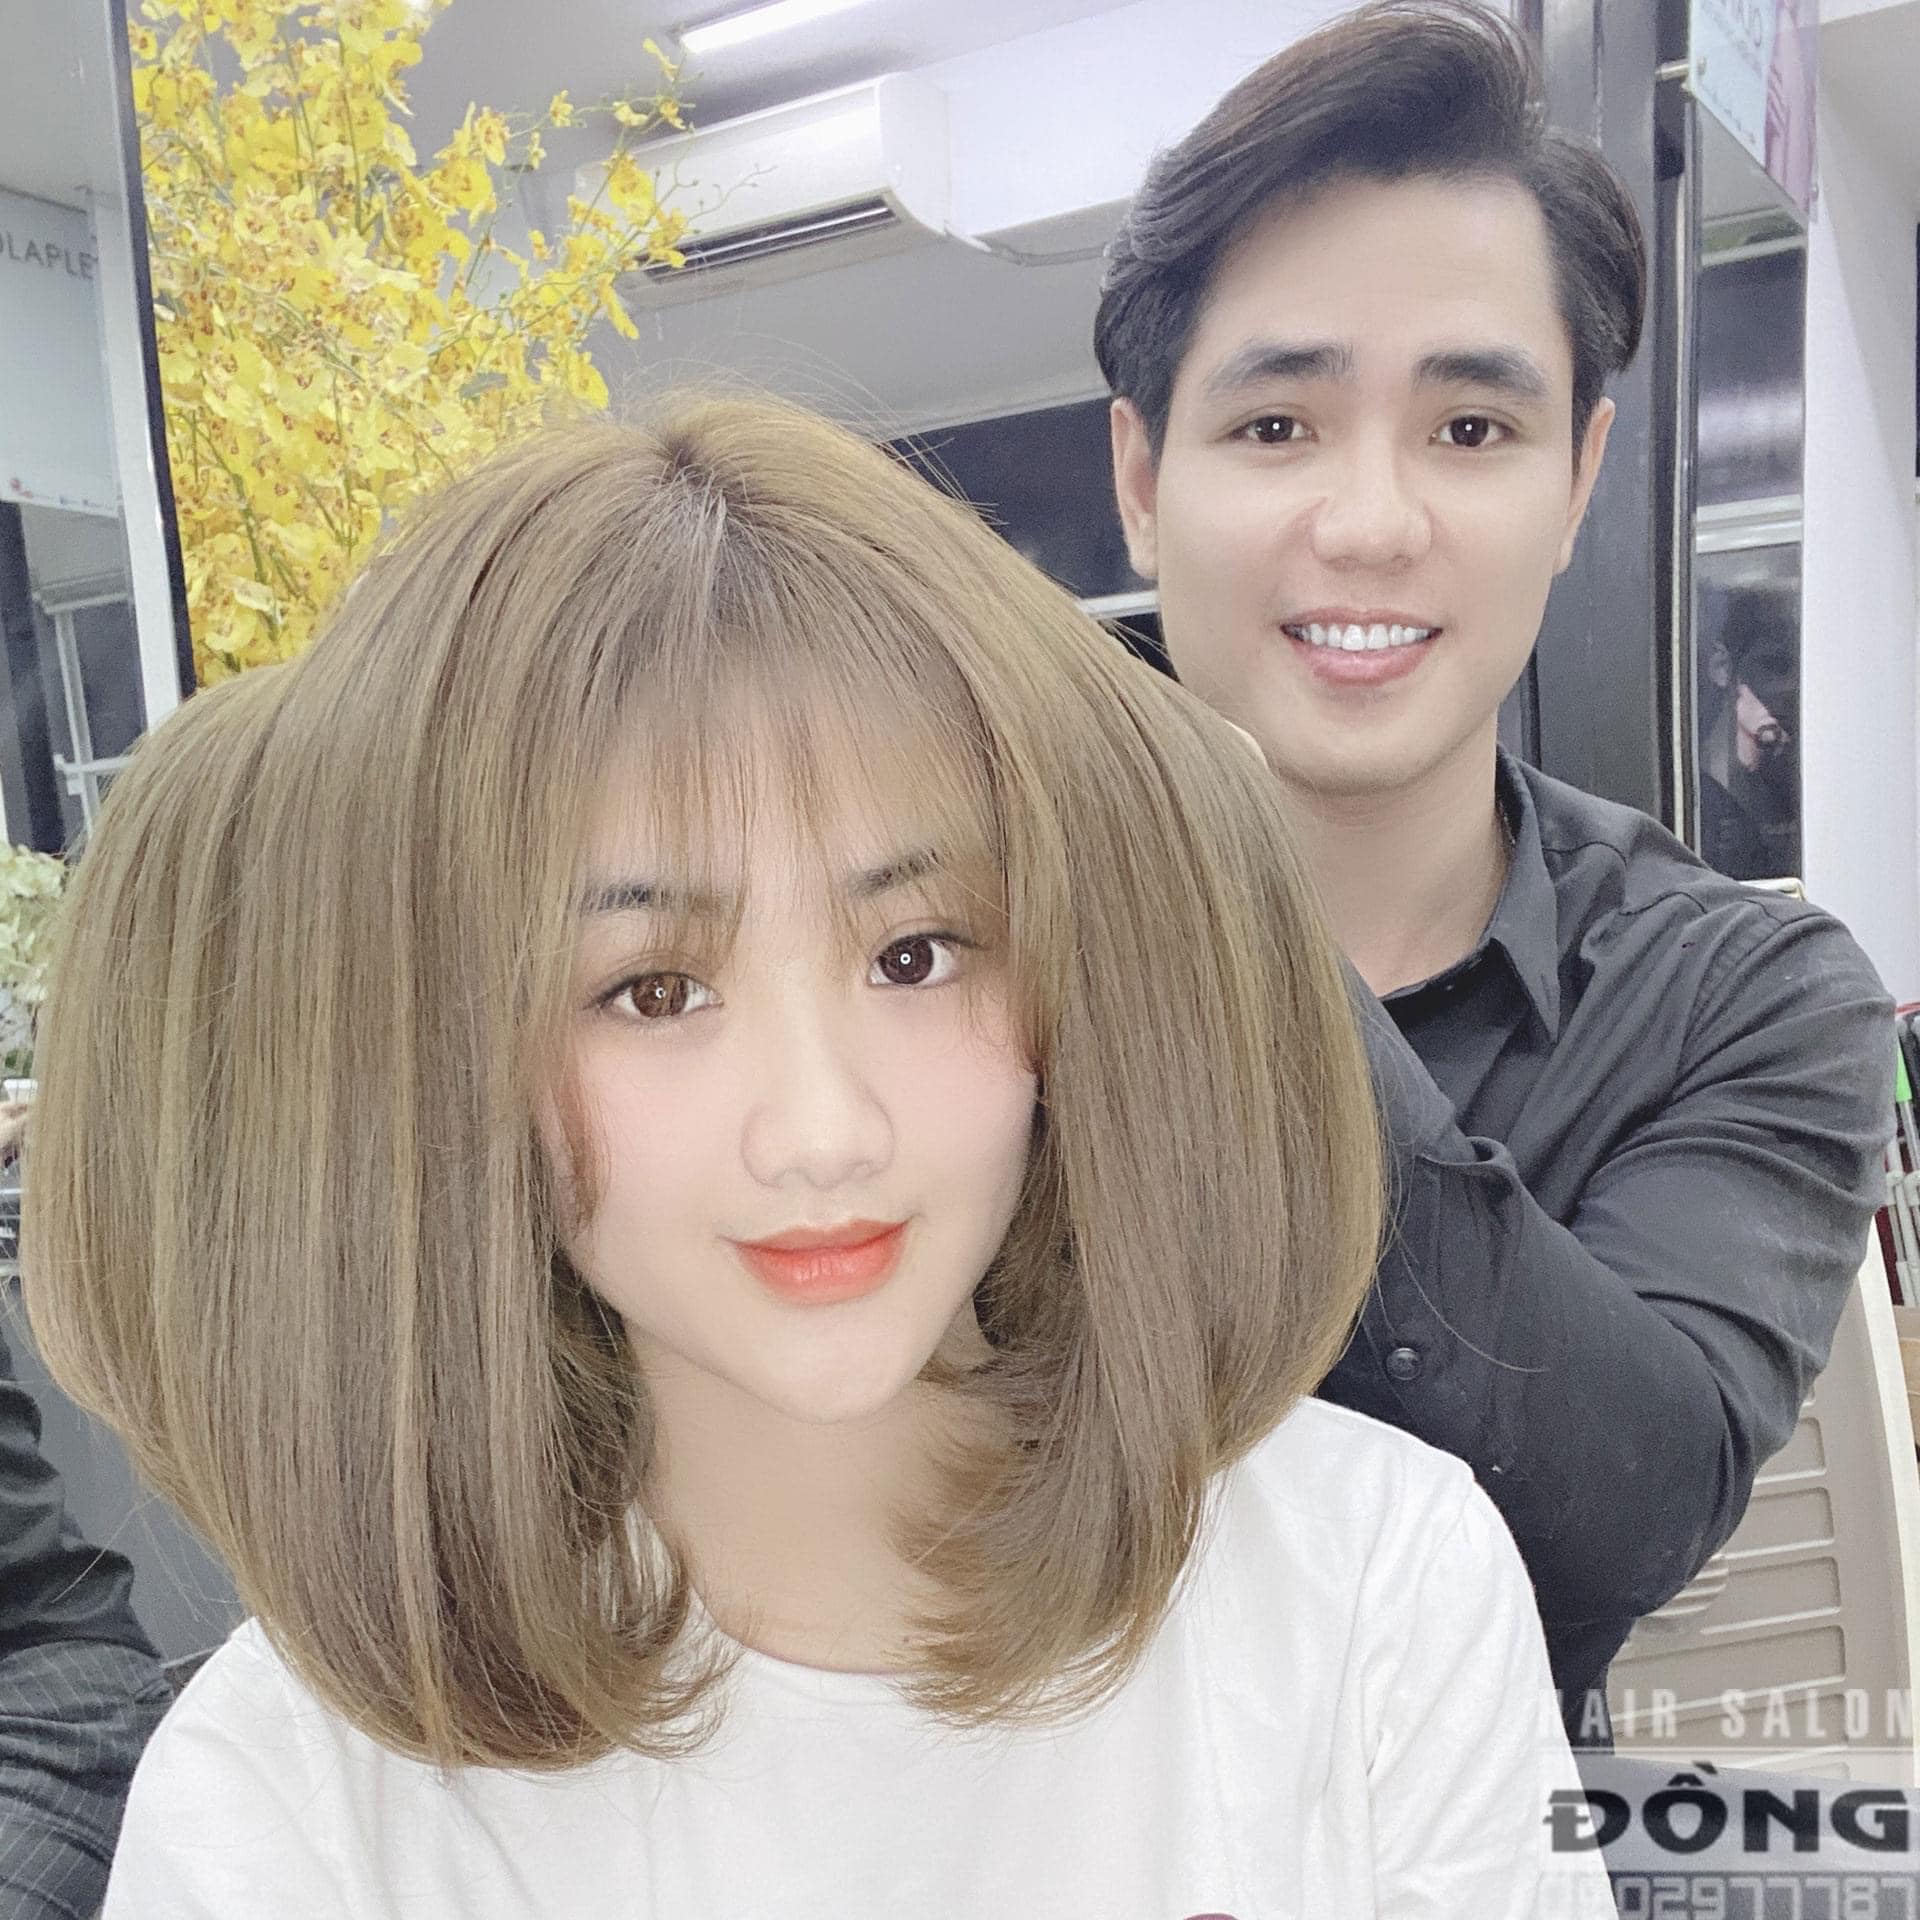 Hair Salon Đồng - Đồng Nai ảnh 1